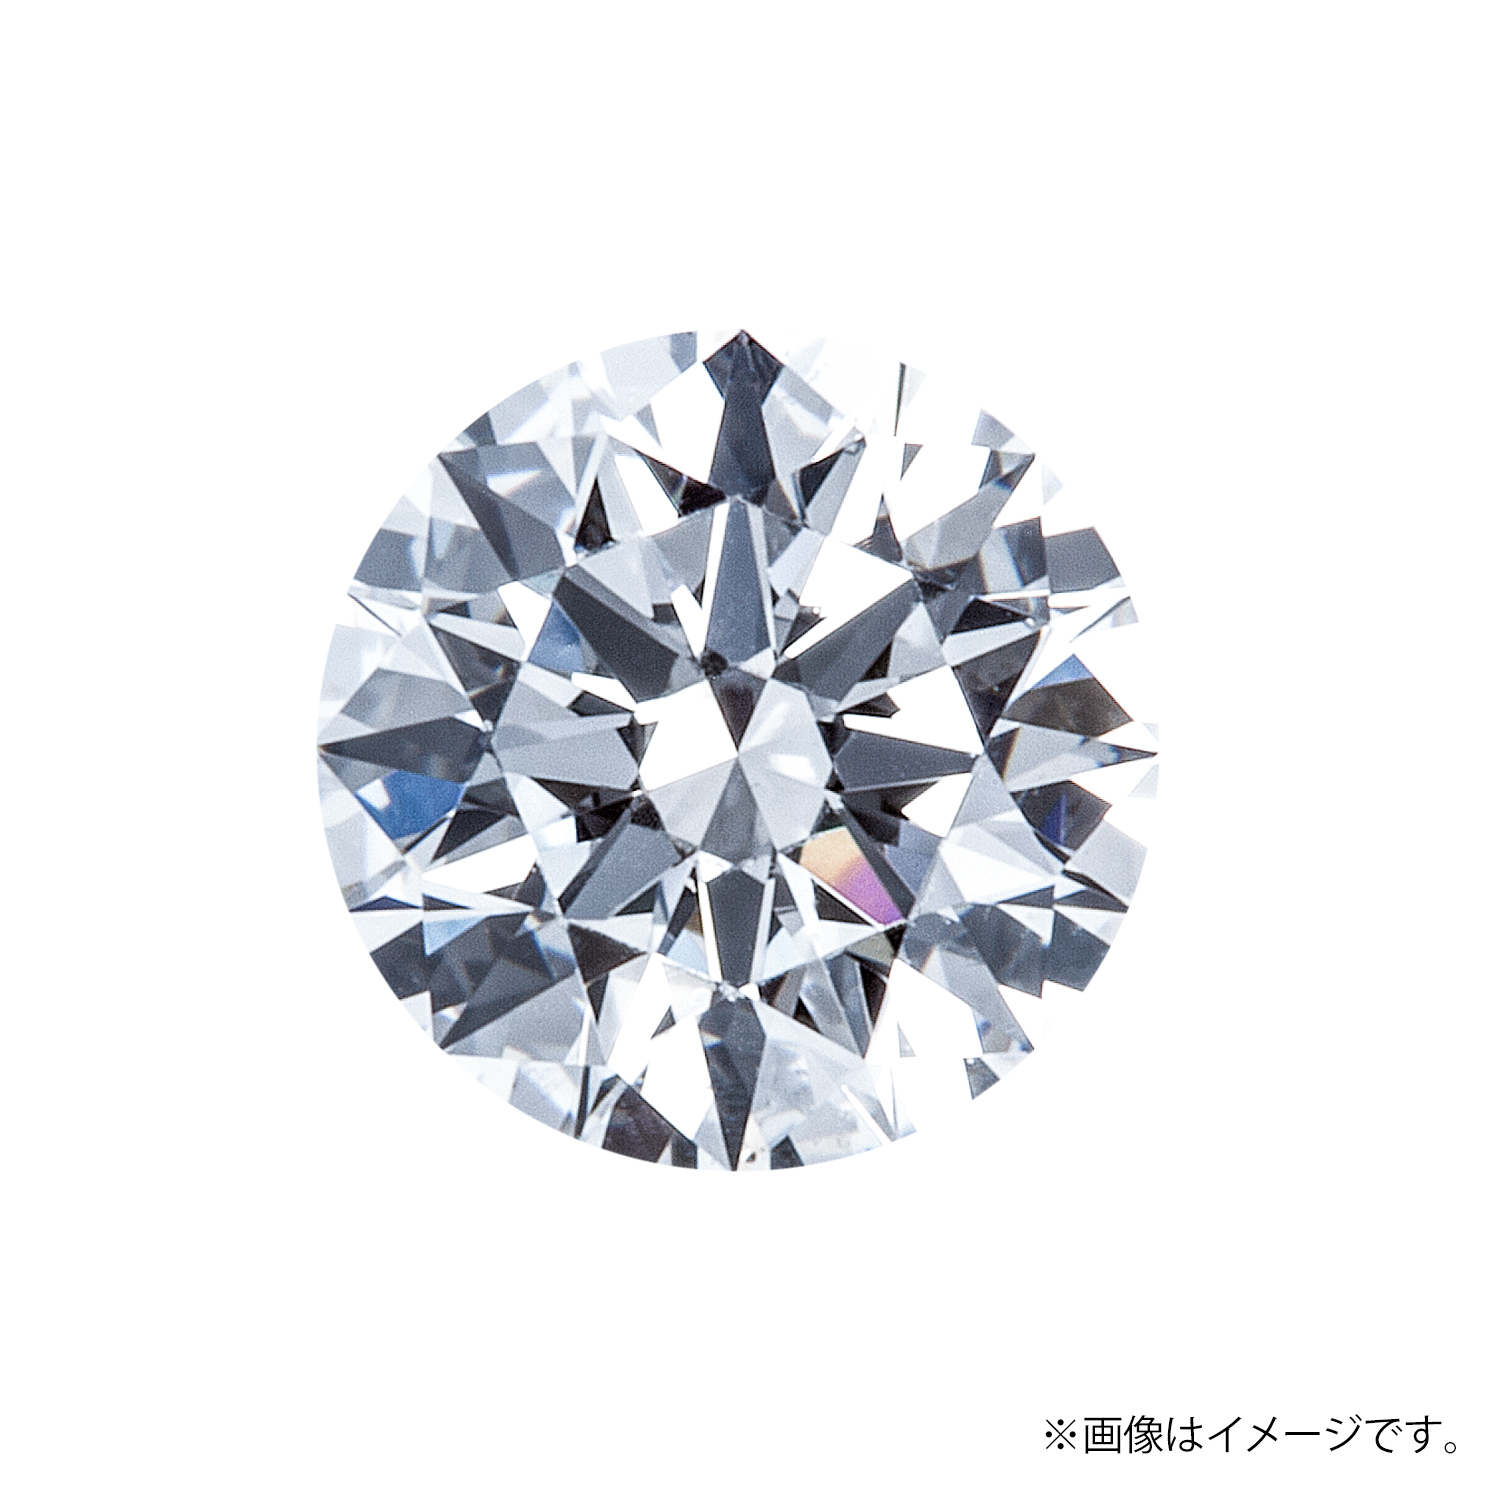 0.208ct Round ダイヤモンド / Ⅾ / IF / 3EX H&C